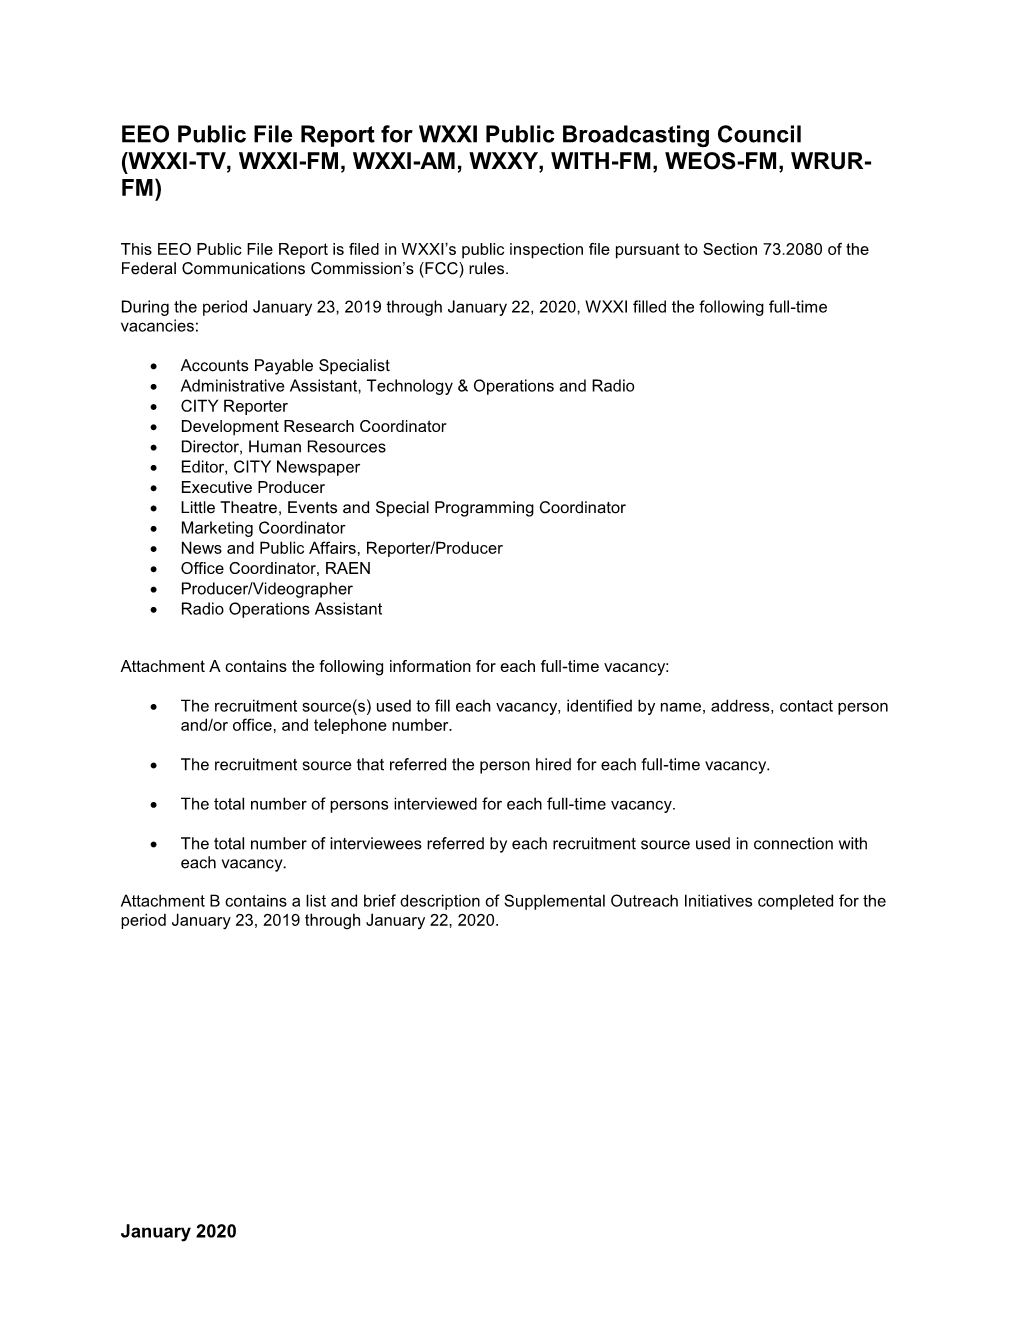 EEO Public File Report for WXXI Public Broadcasting Council (WXXI-TV, WXXI-FM, WXXI-AM, WXXY, WITH-FM, WEOS-FM, WRUR- FM)